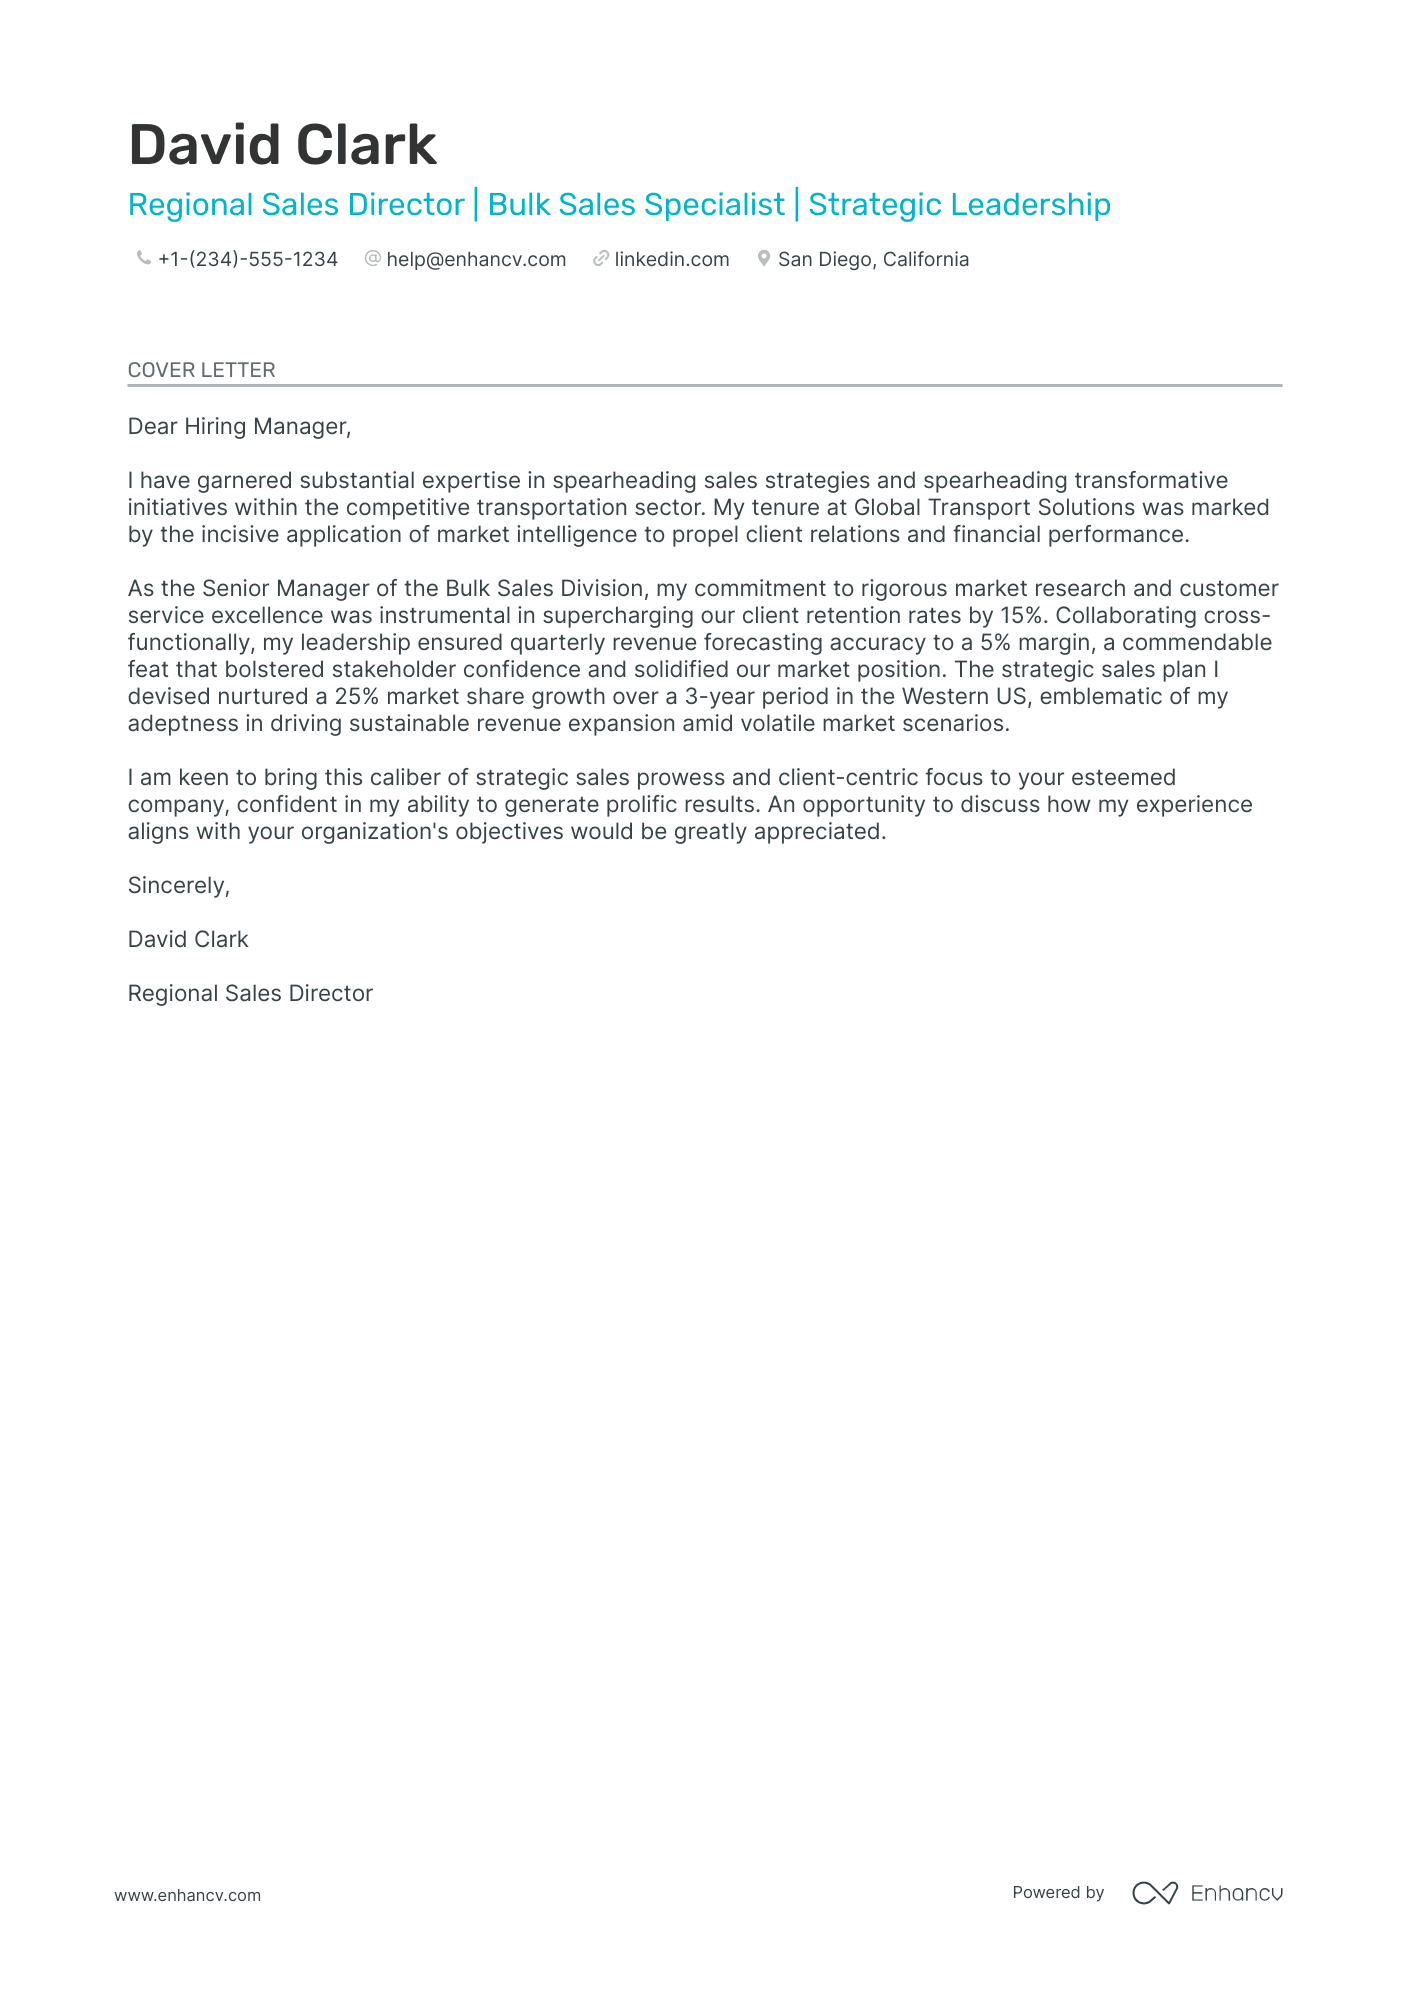 Regional Sales Director cover letter